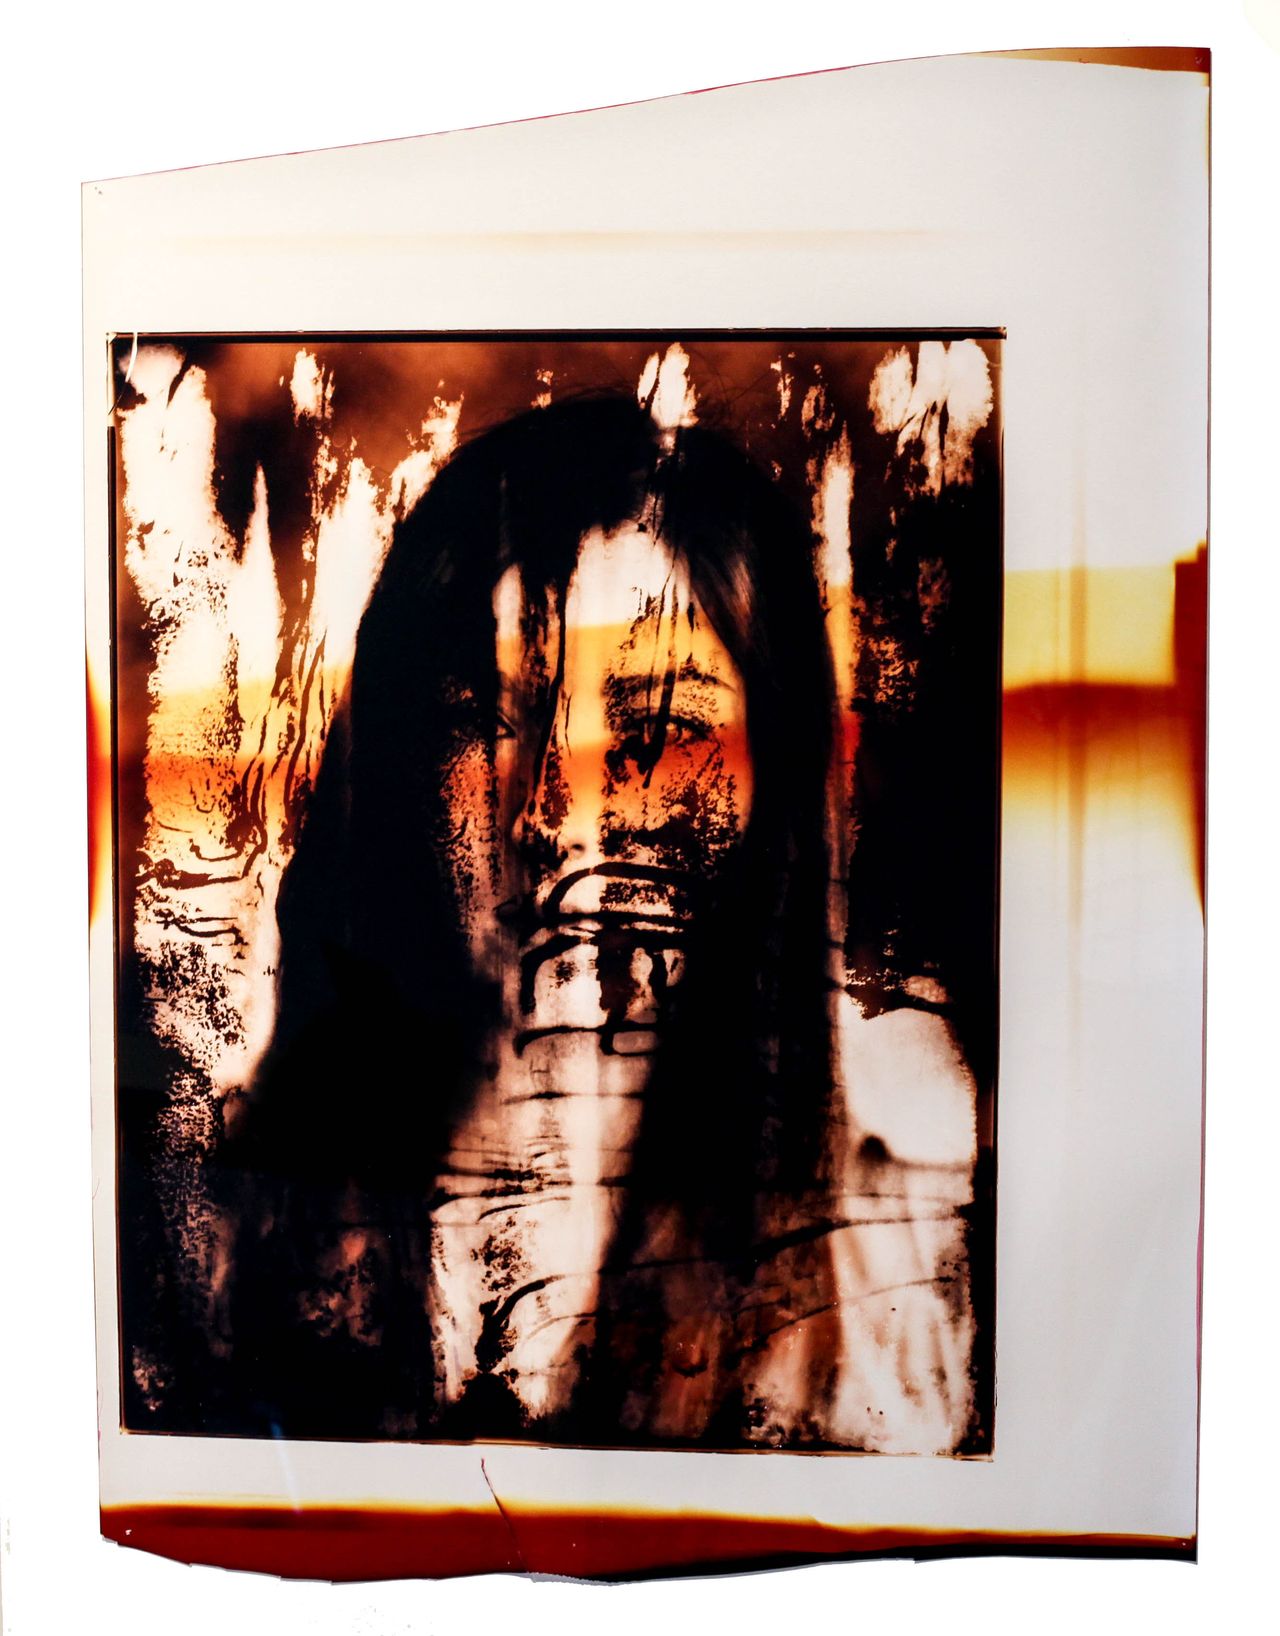 Hadi Salehi. "East," (2008) layered analog film print, 40”x30”.